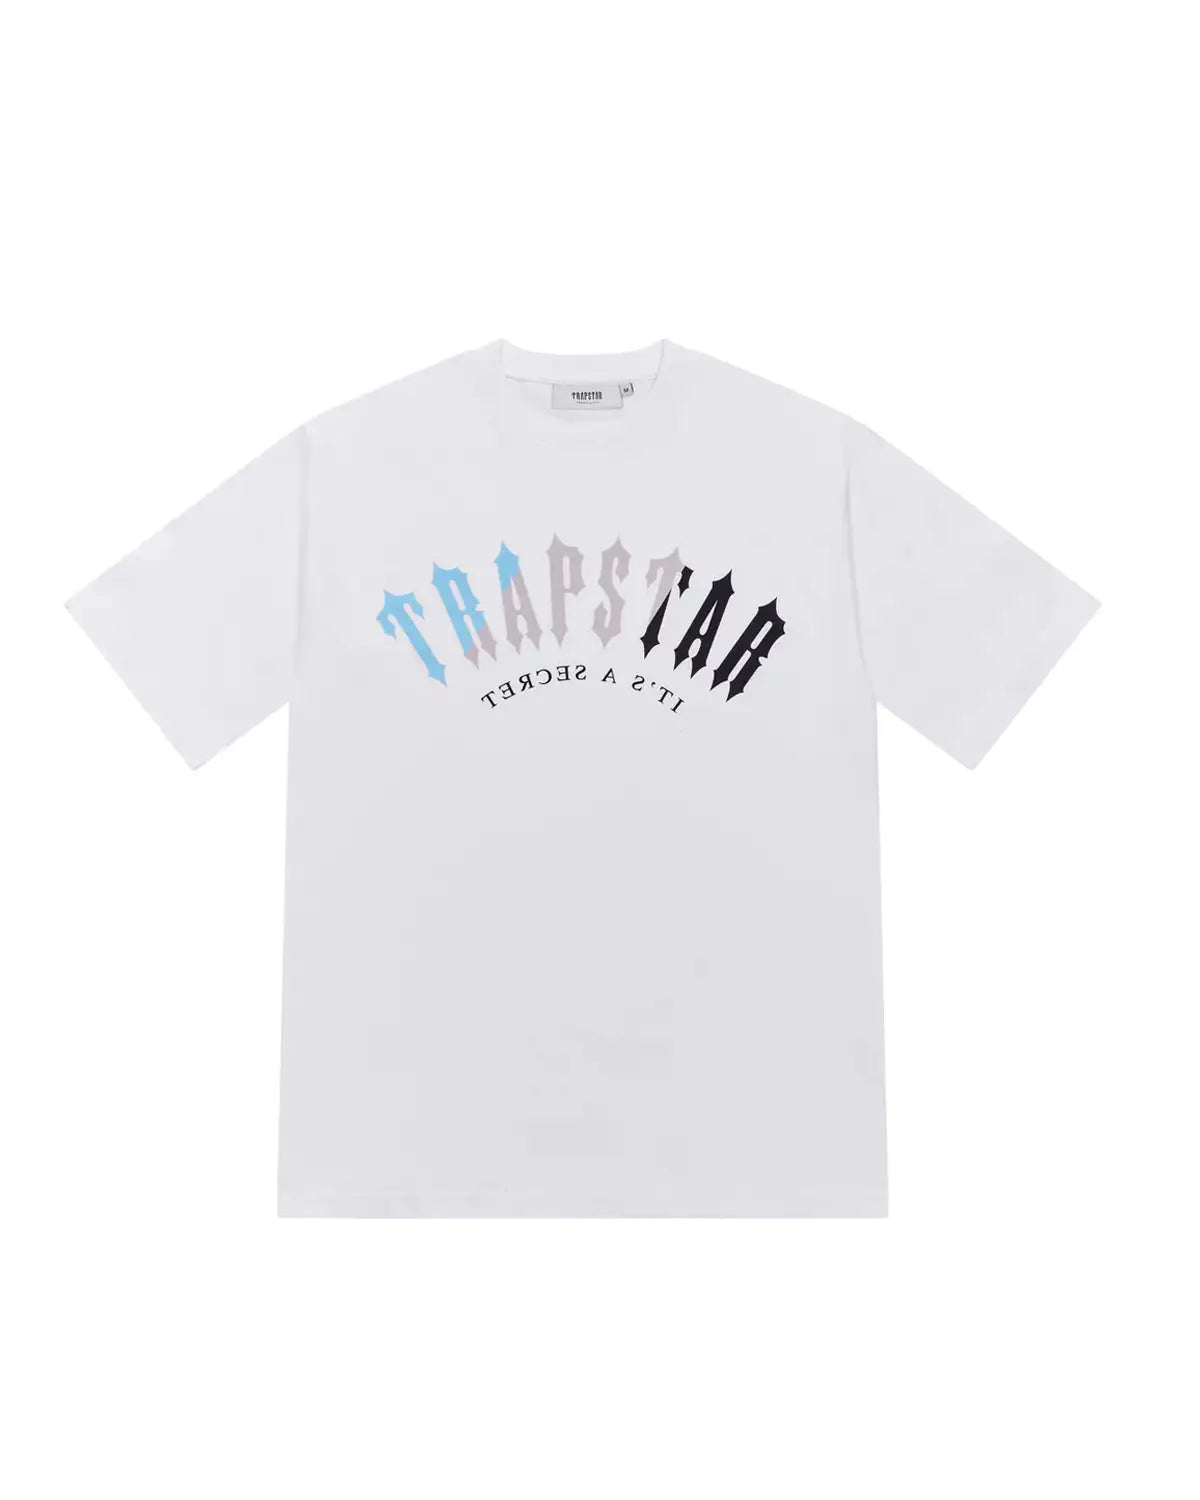 Trapstar Decoded Print Tee - White/Light Blue